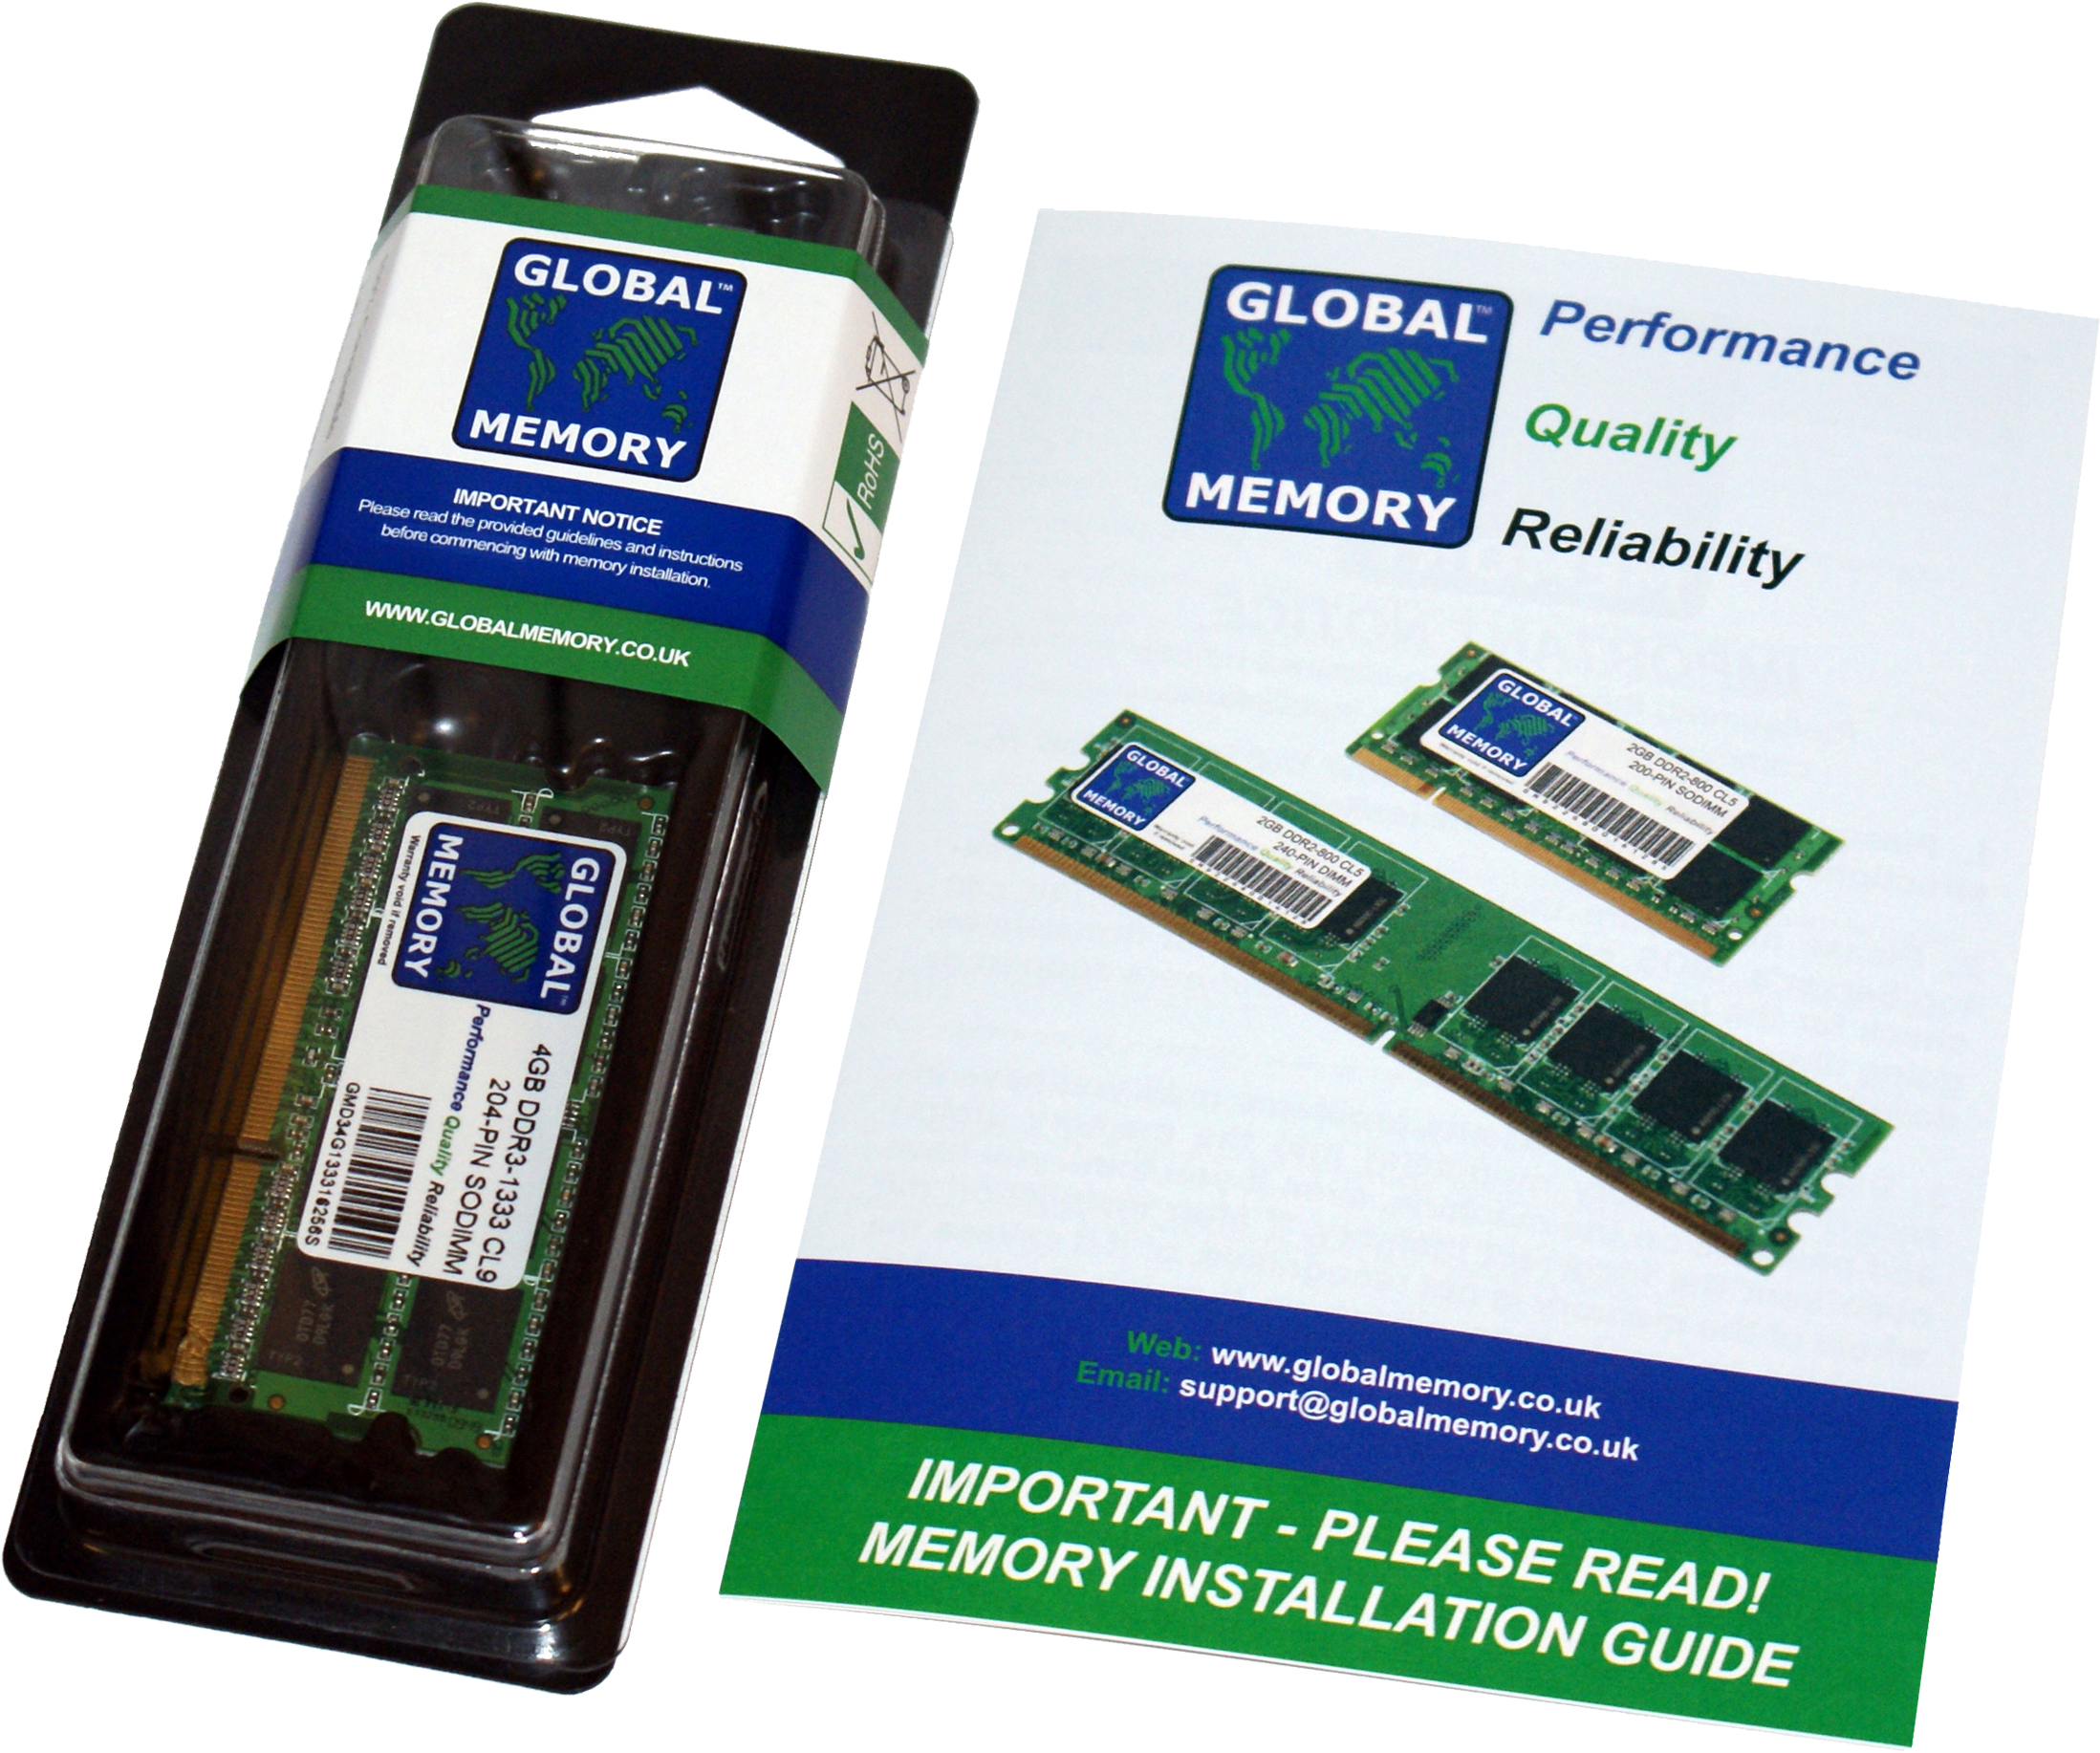 8GB DDR4 2400MHz PC4-19200 260-PIN SODIMM MEMORY RAM FOR HEWLETT-PACKARD LAPTOPS/NOTEBOOKS